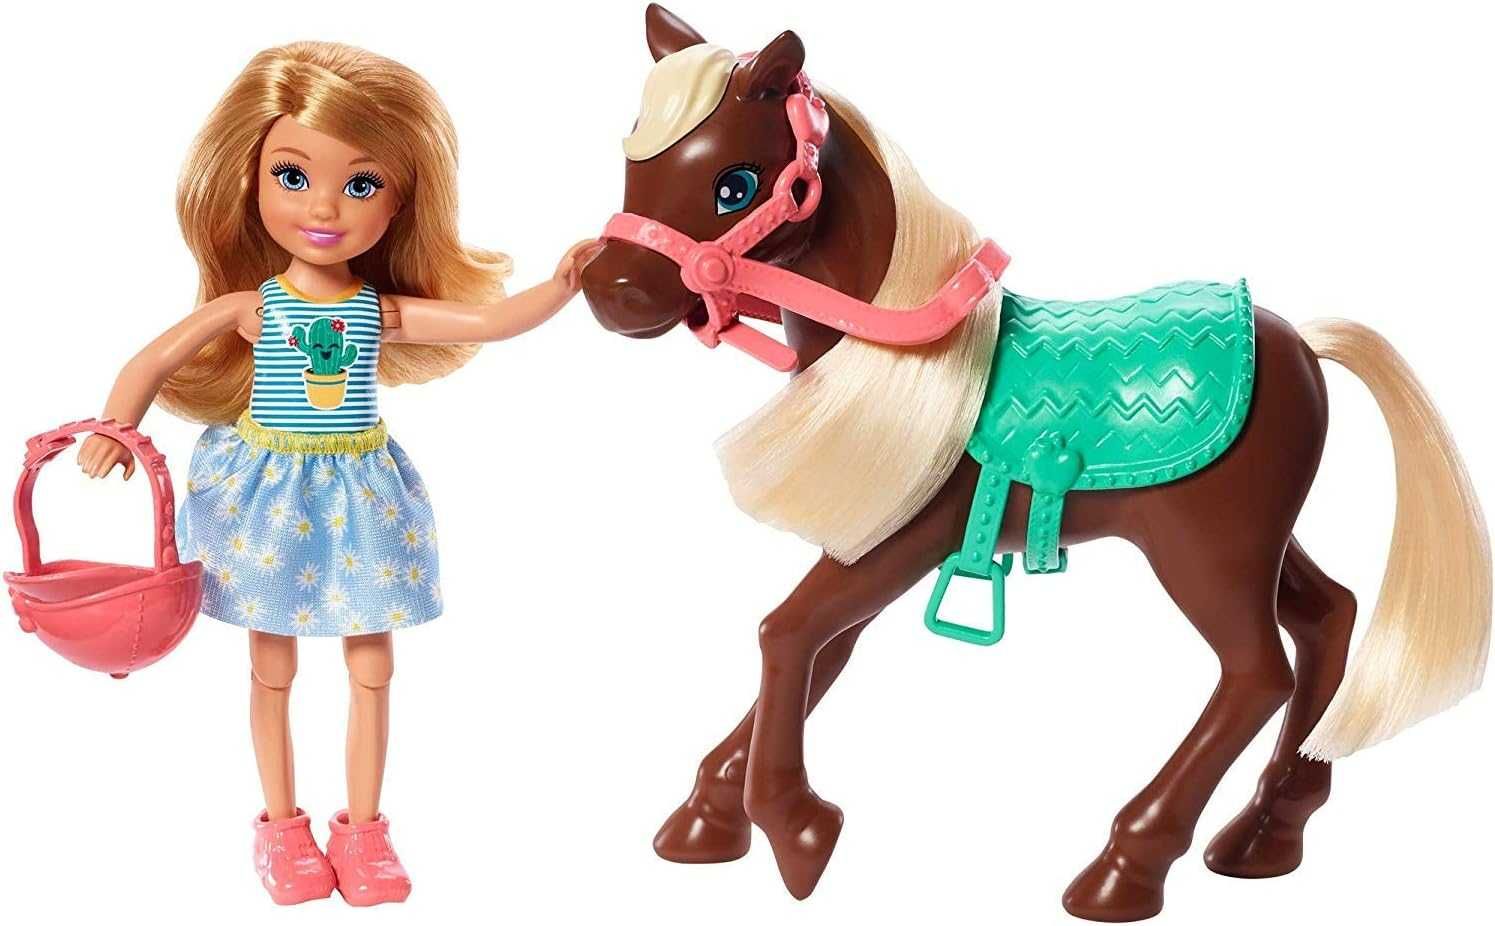 Papusa Barbie Chelsea si poneiul